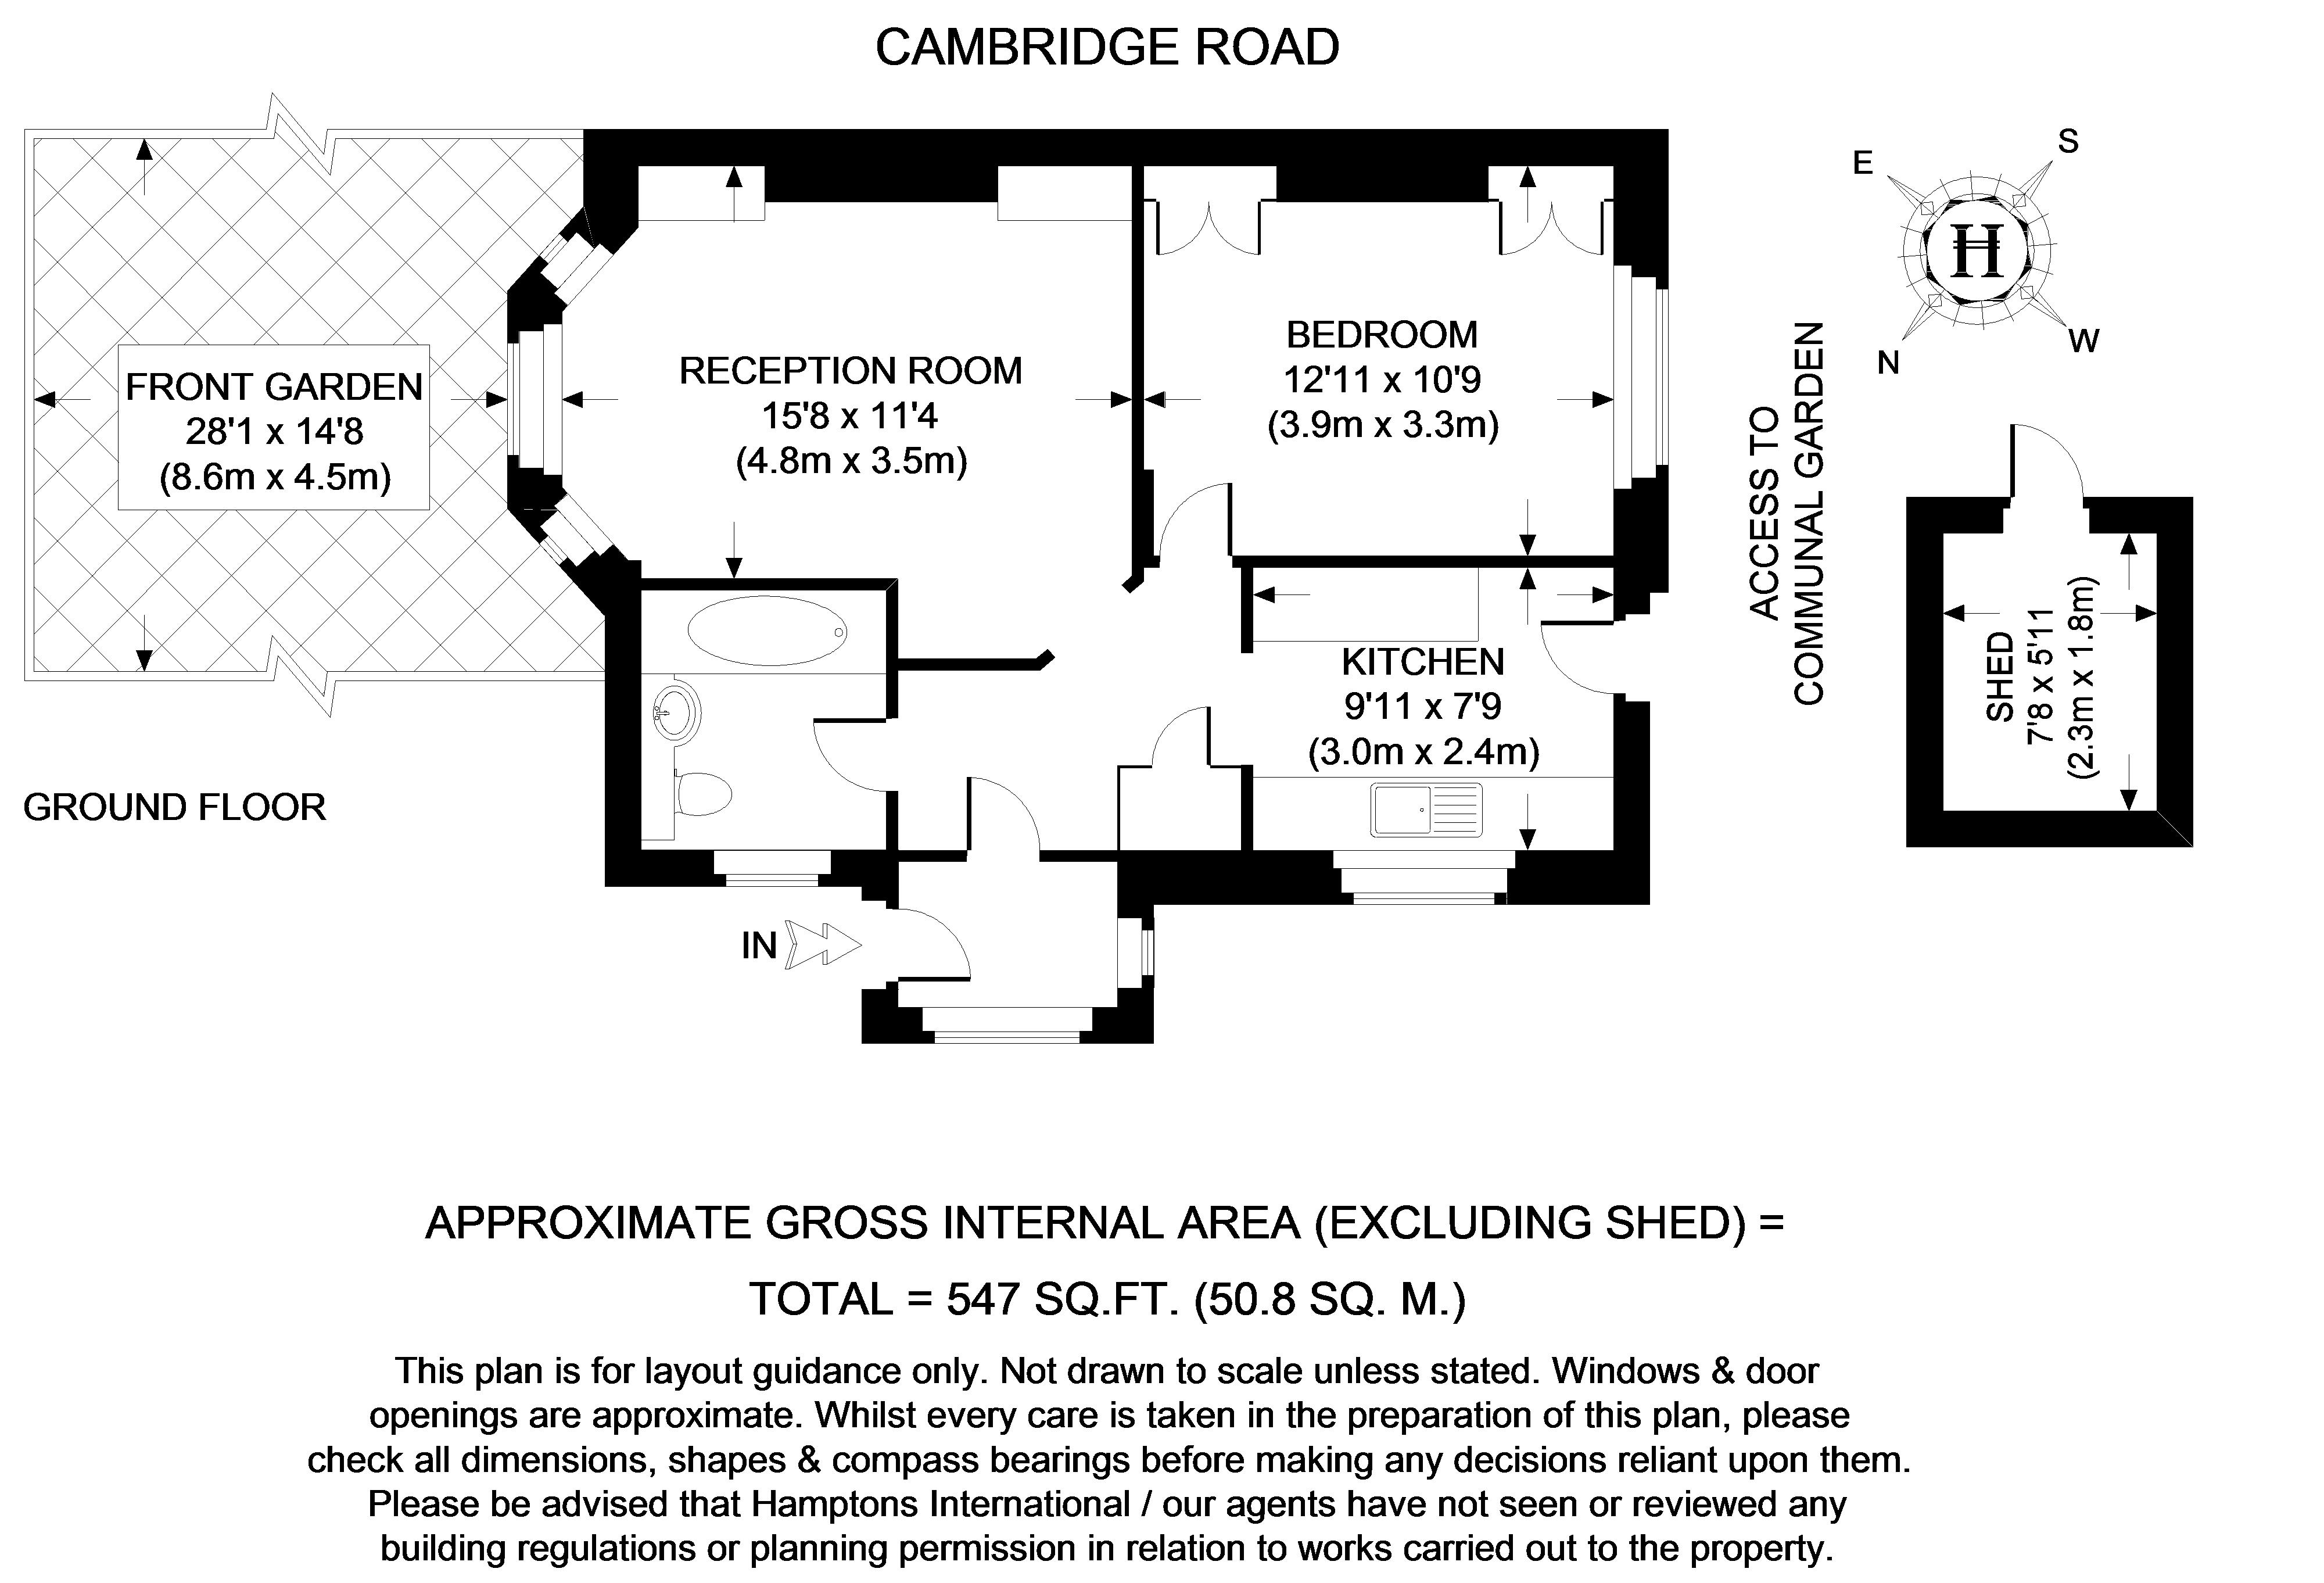 1 Bedrooms Flat to rent in Cambridge Road, Teddington TW11